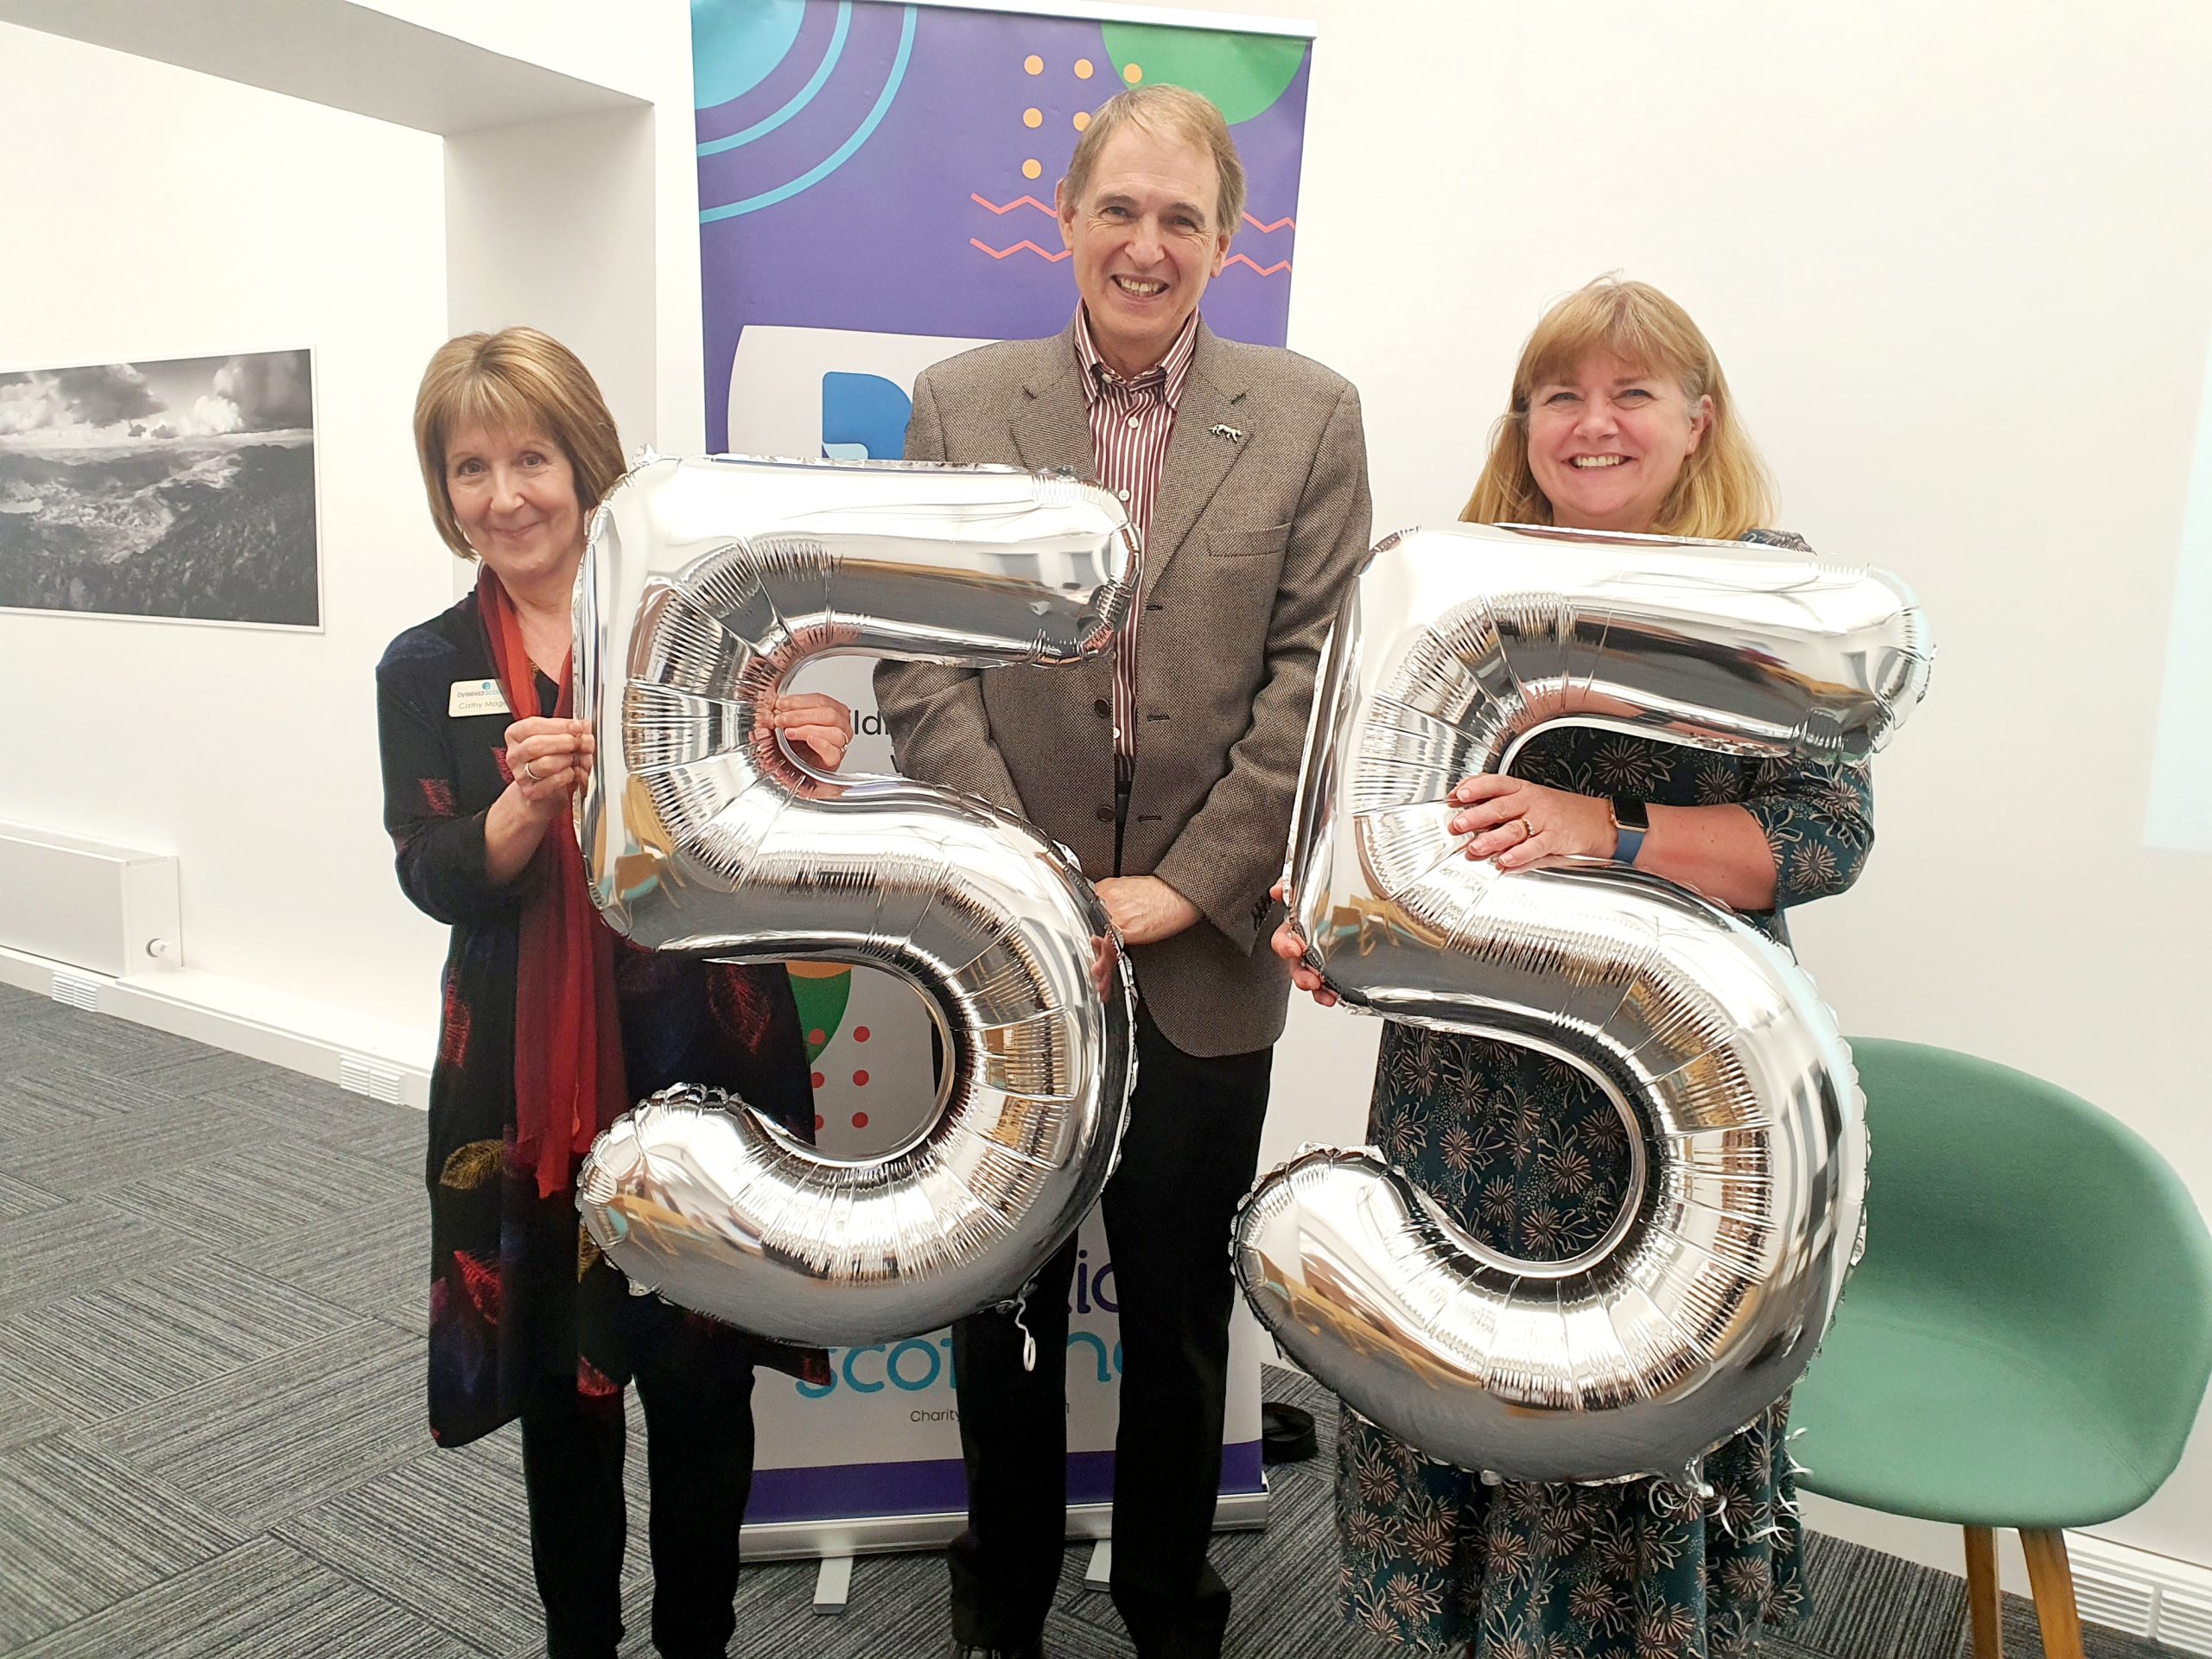 Representatives of Dyslexia Scotland hold balloons in the shape of '55'